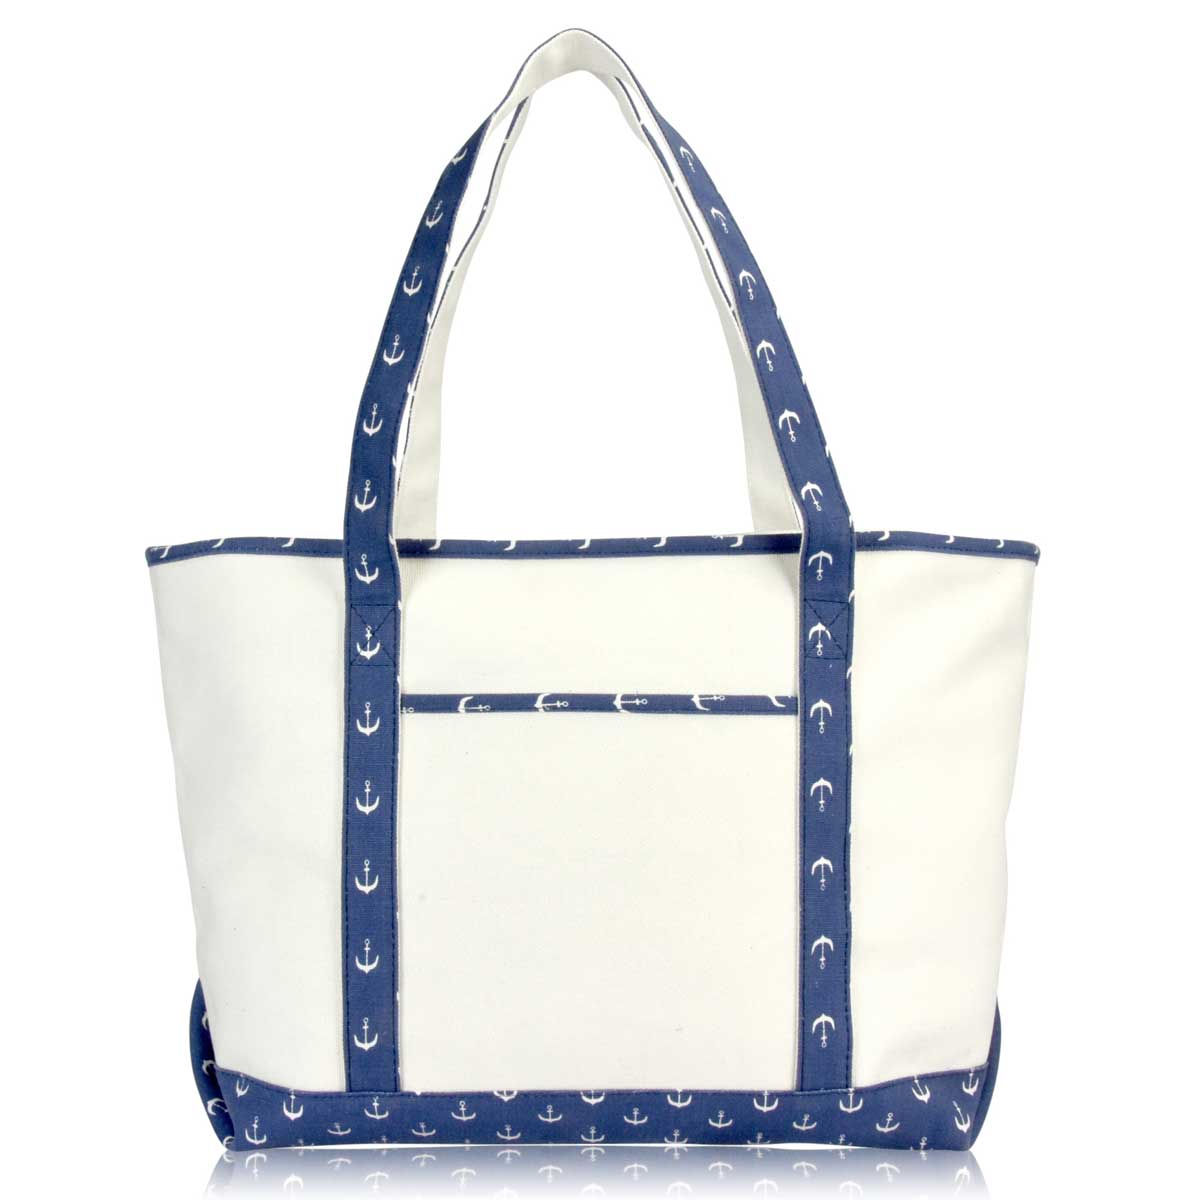 Dalix 23" Premium Tote Bag